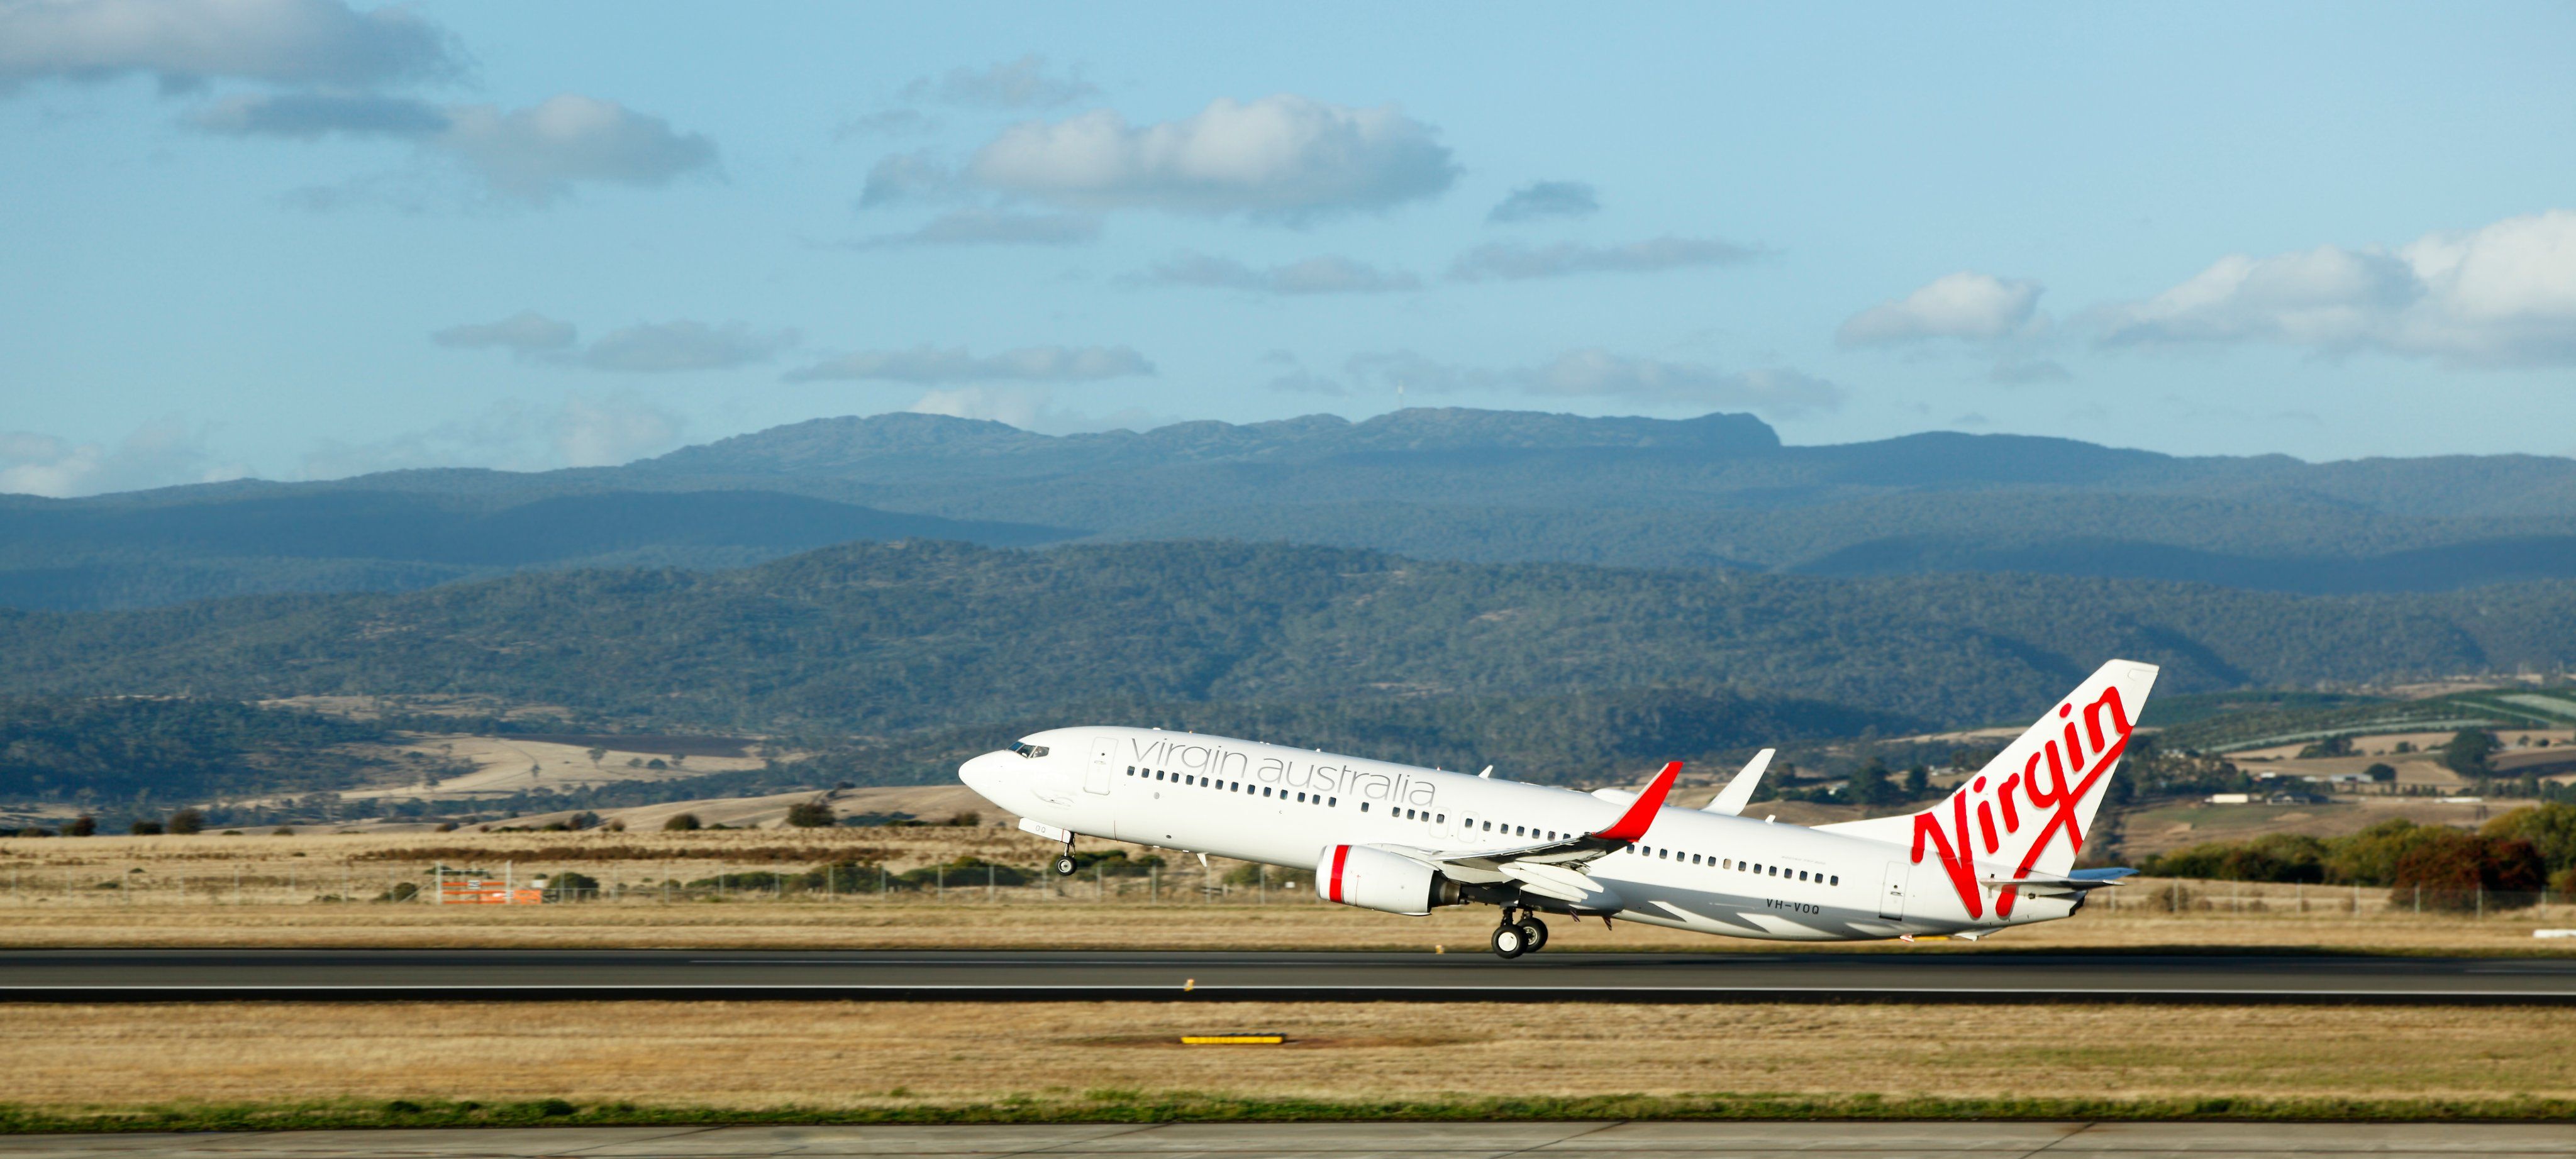 Virgin Australia Boeing 737-800 taking off.